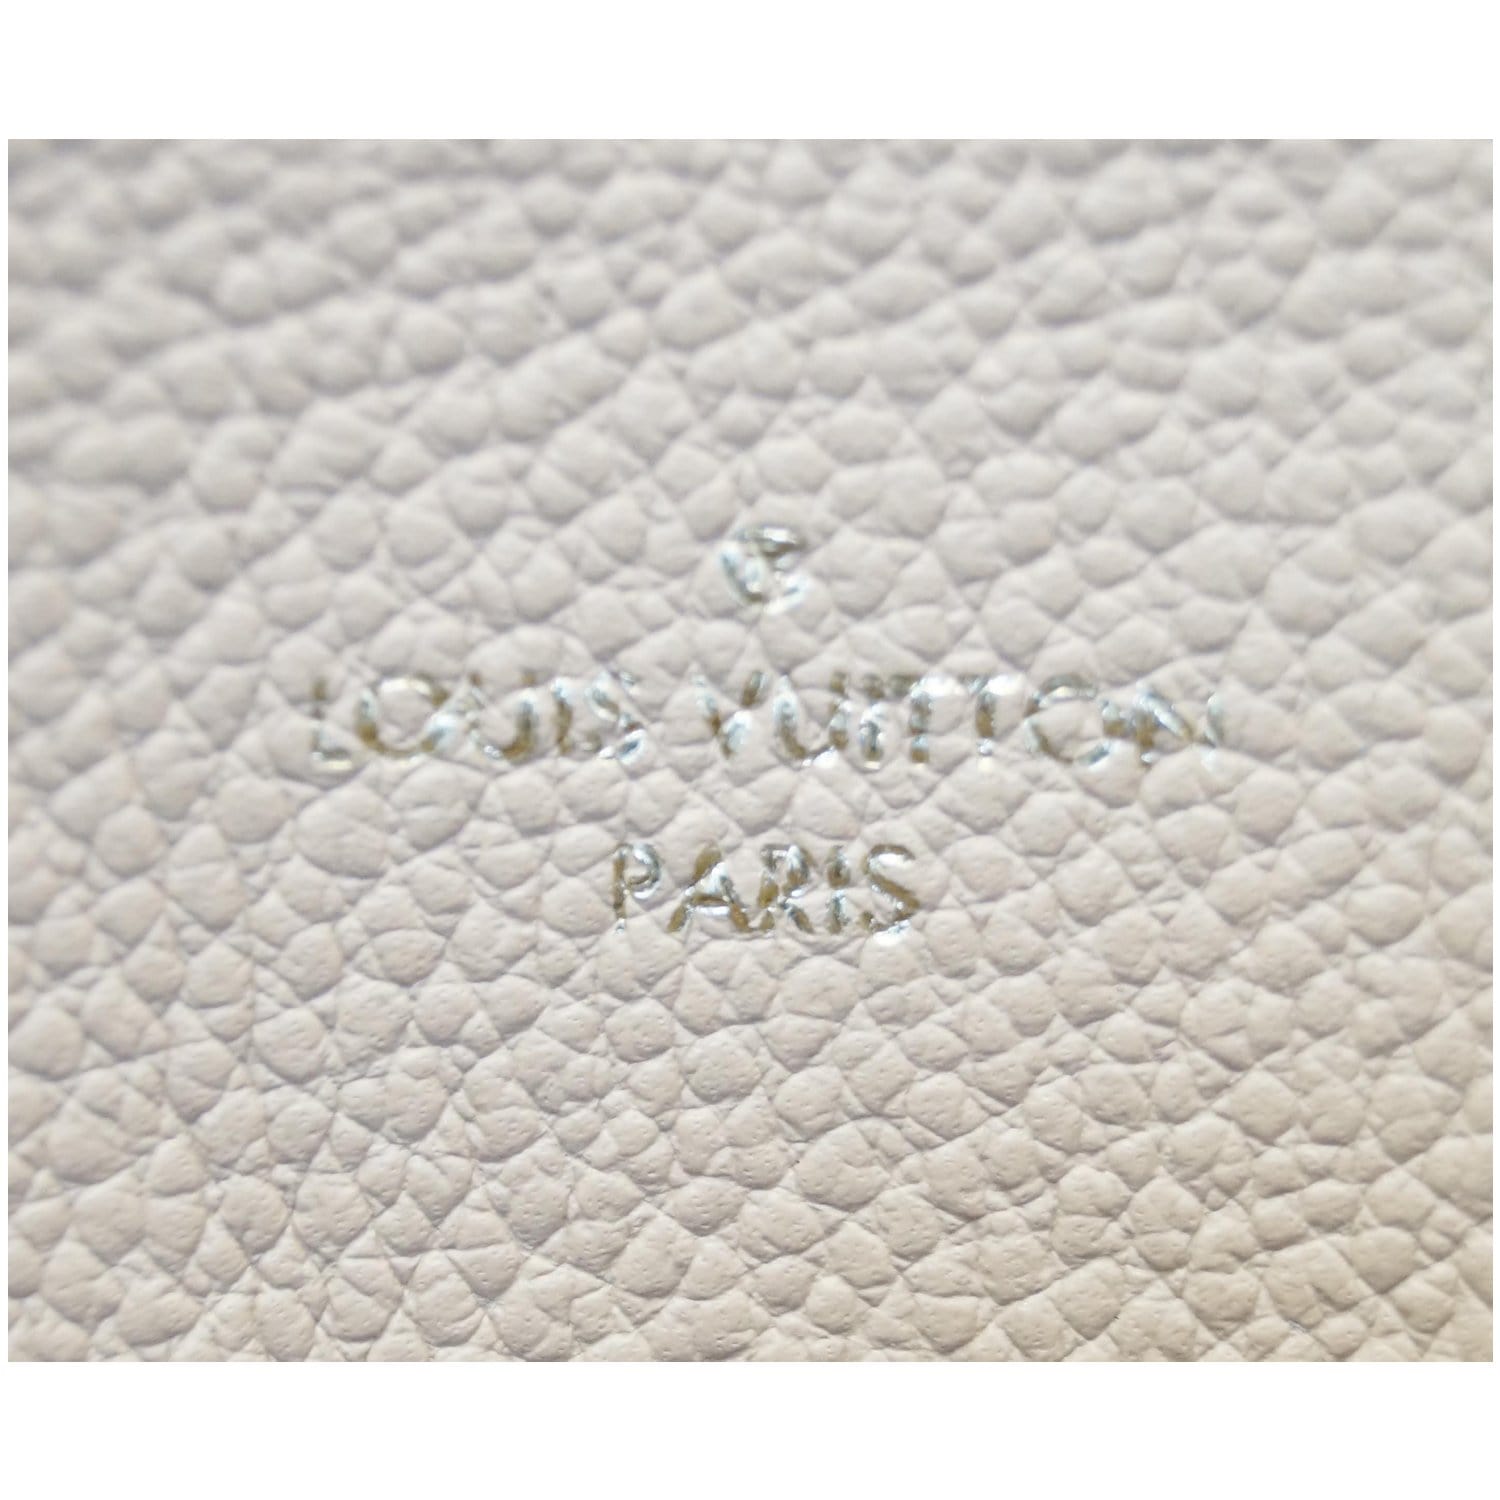 Louis Vuitton Apricot Monogram Empreinte Leather Bagatelle Bag